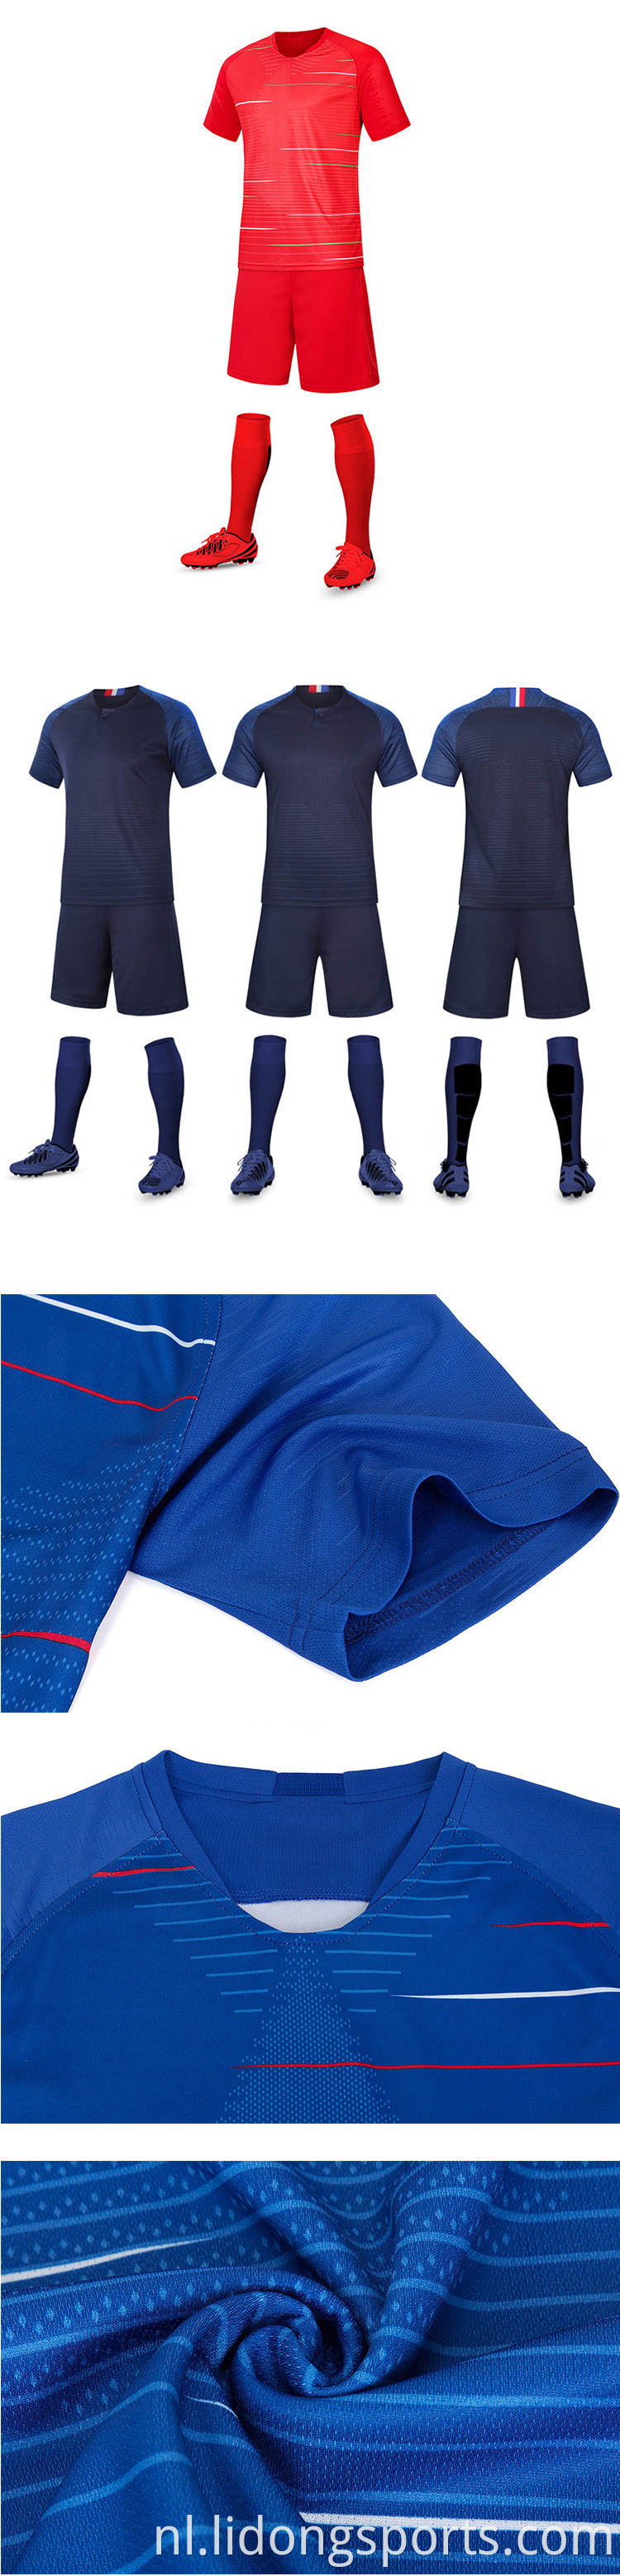 Factory high-end kwaliteit voetballen Jerseys aangepaste voetbaluniform voetbaljersey kit groothandel